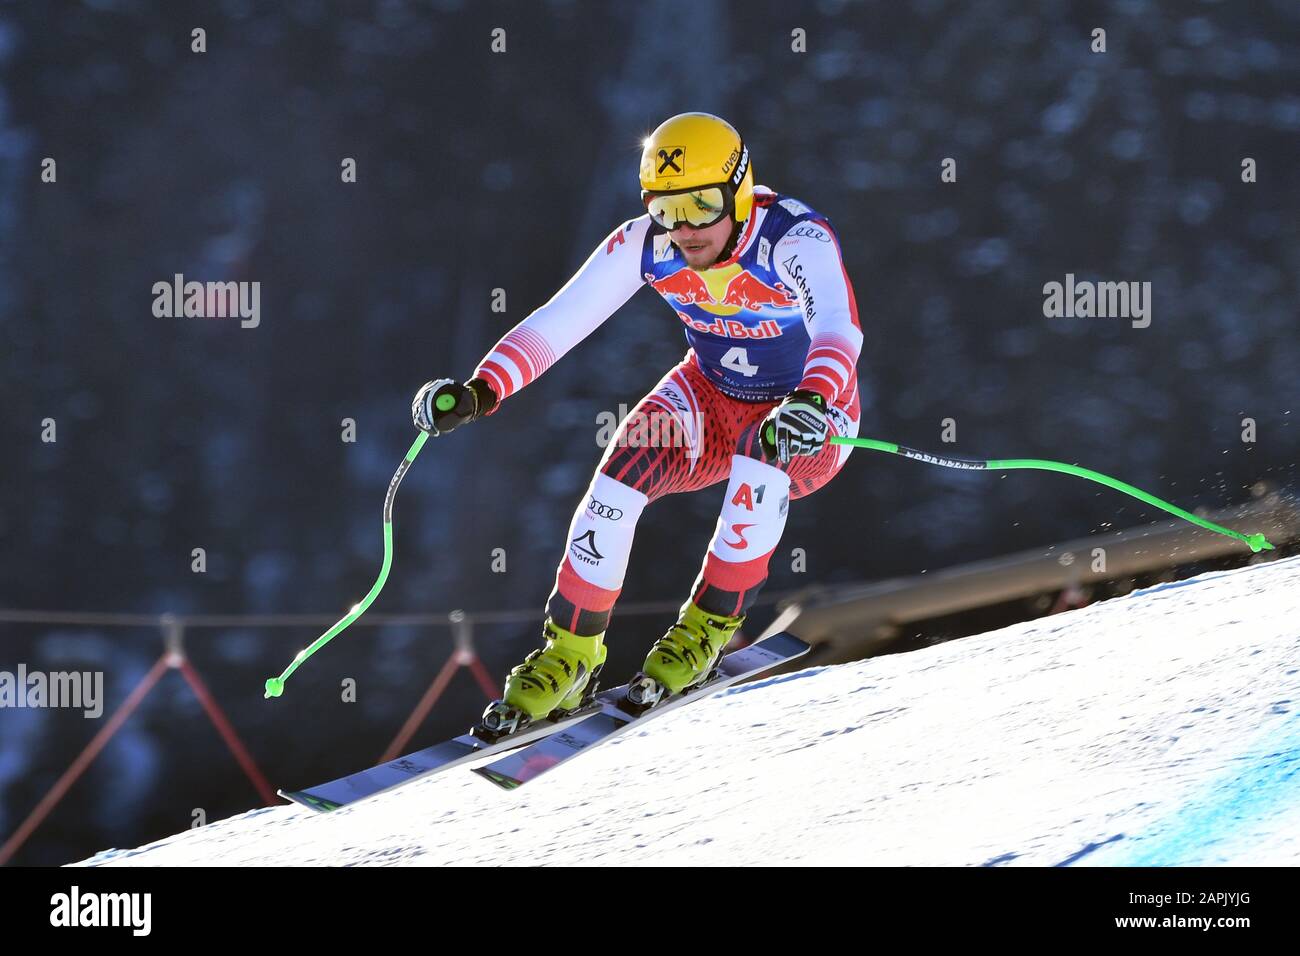 Max FRANZ (AUT), action, alpine skiing, training, 80. Hahnenkamm race 2020, Kitzbuehel, Hahnenkamm, Streif, departure, January 23, 2020 | usage worldwide Stock Photo